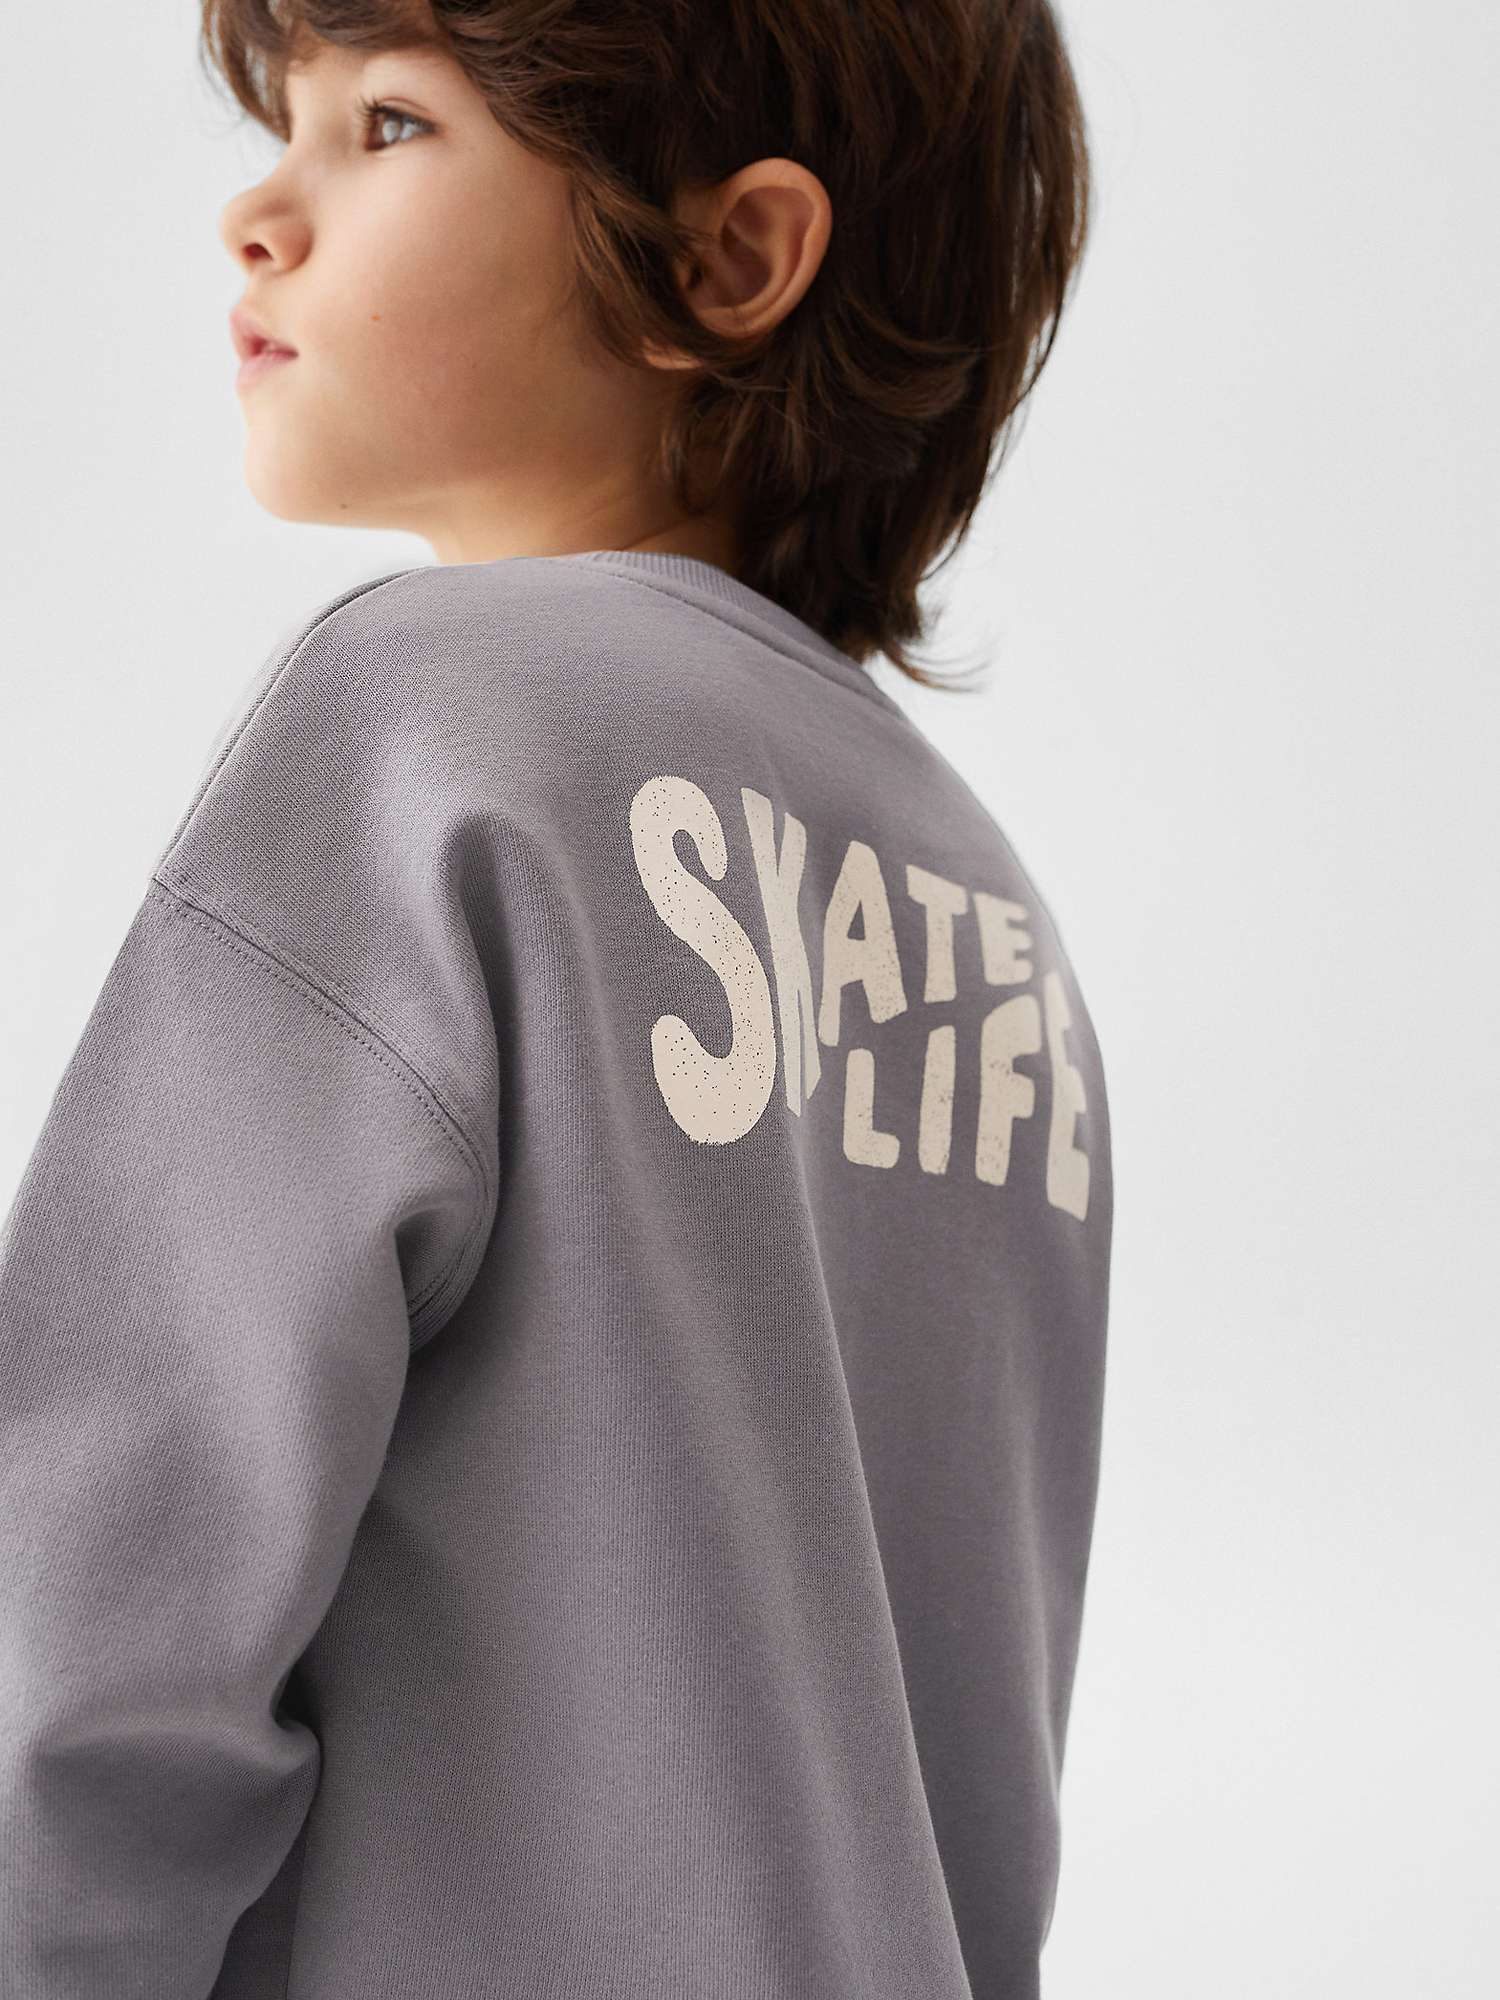 Buy Mango Kids' Skate Life Sweatshirt, Grey Online at johnlewis.com